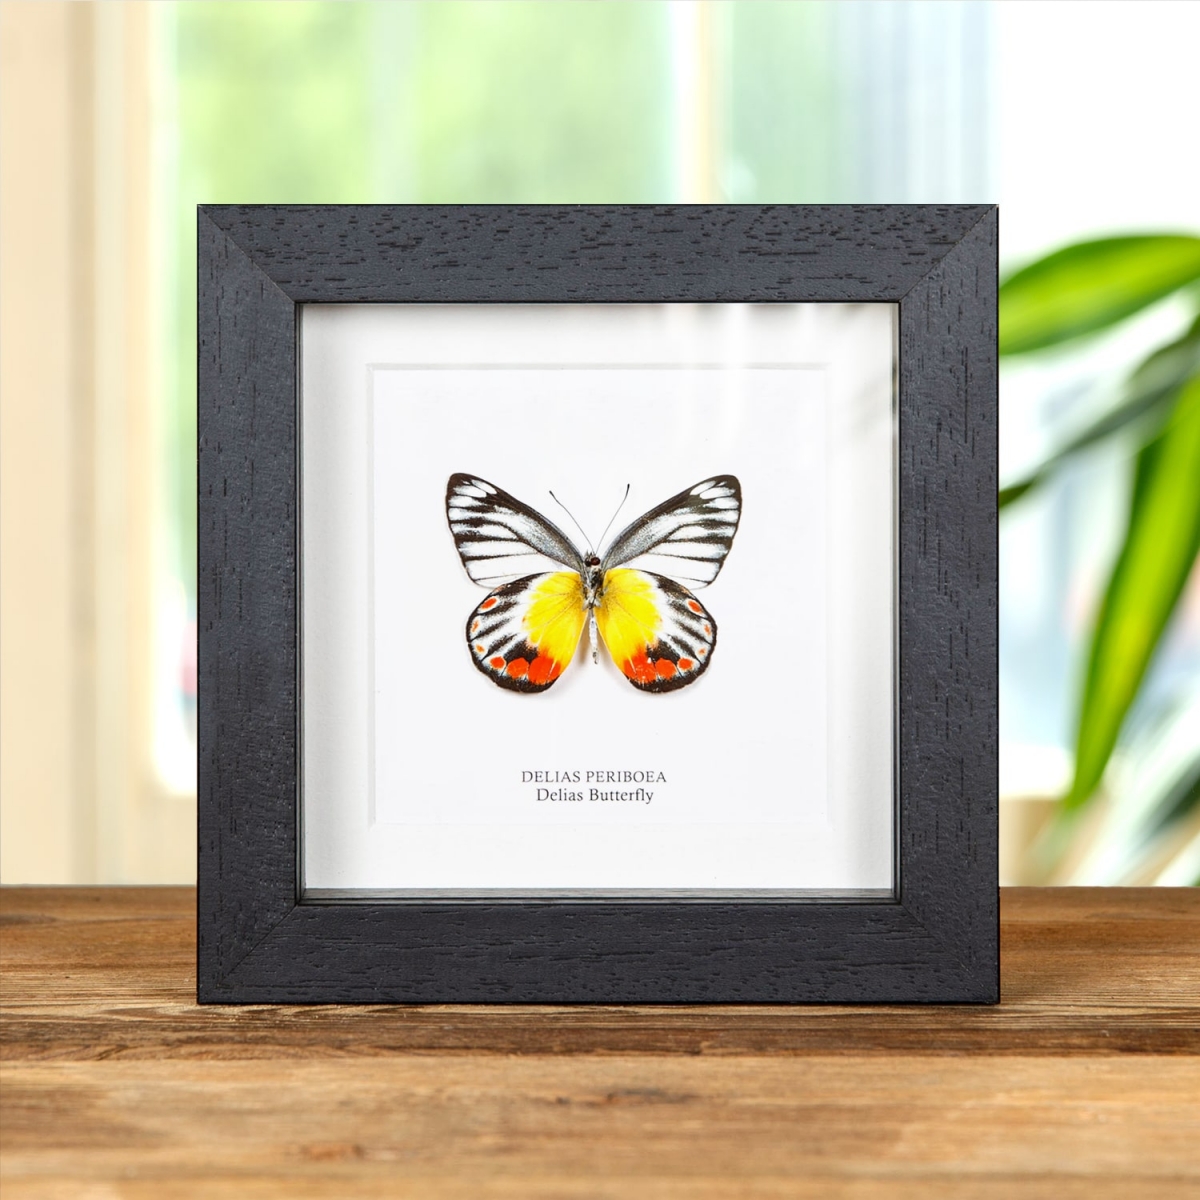 Minibeast Delias Butterfly in Box Frame (Delias periboea)